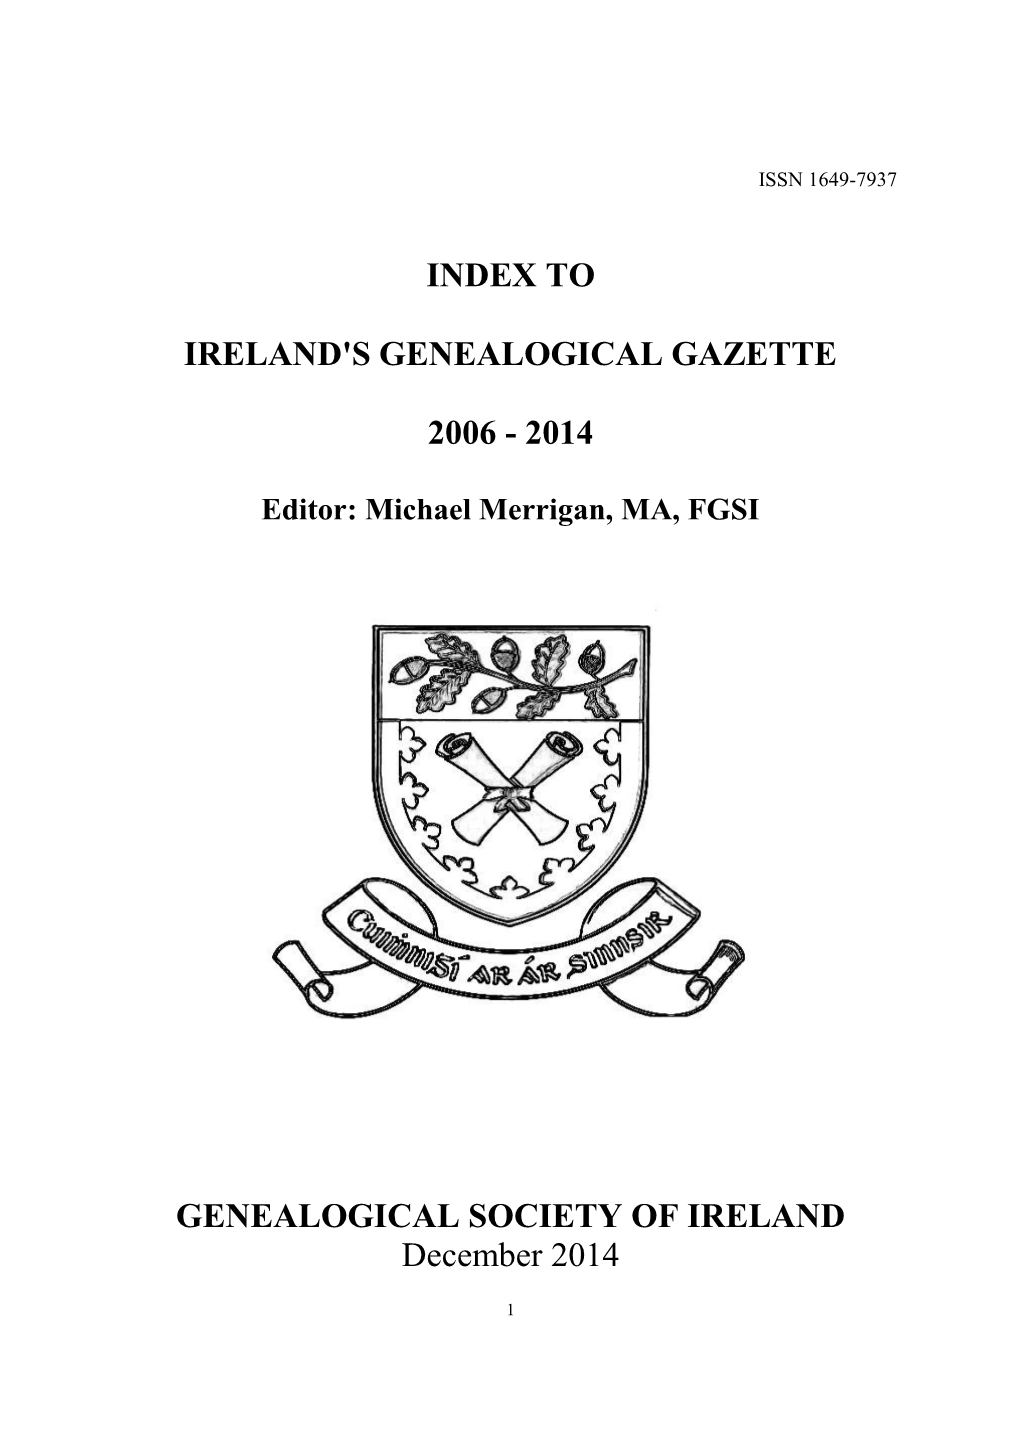 Index to Ireland's Genealogical Gazette 2006